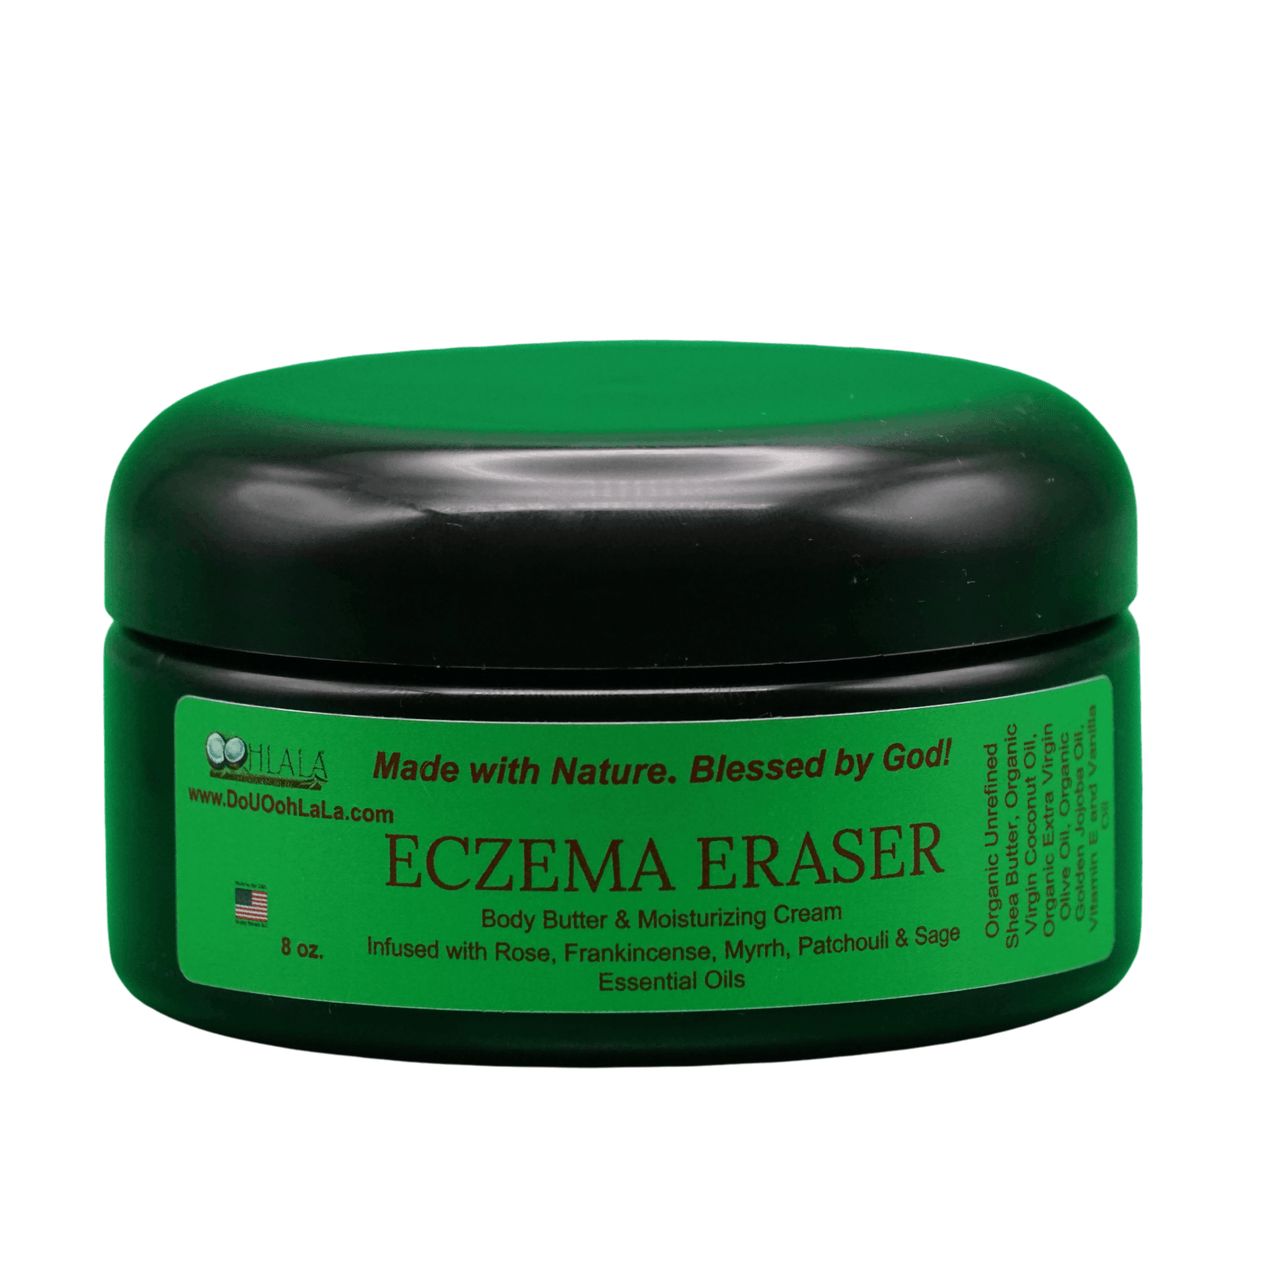 Eczema Eraser Body Butter & Moisturizing Cream